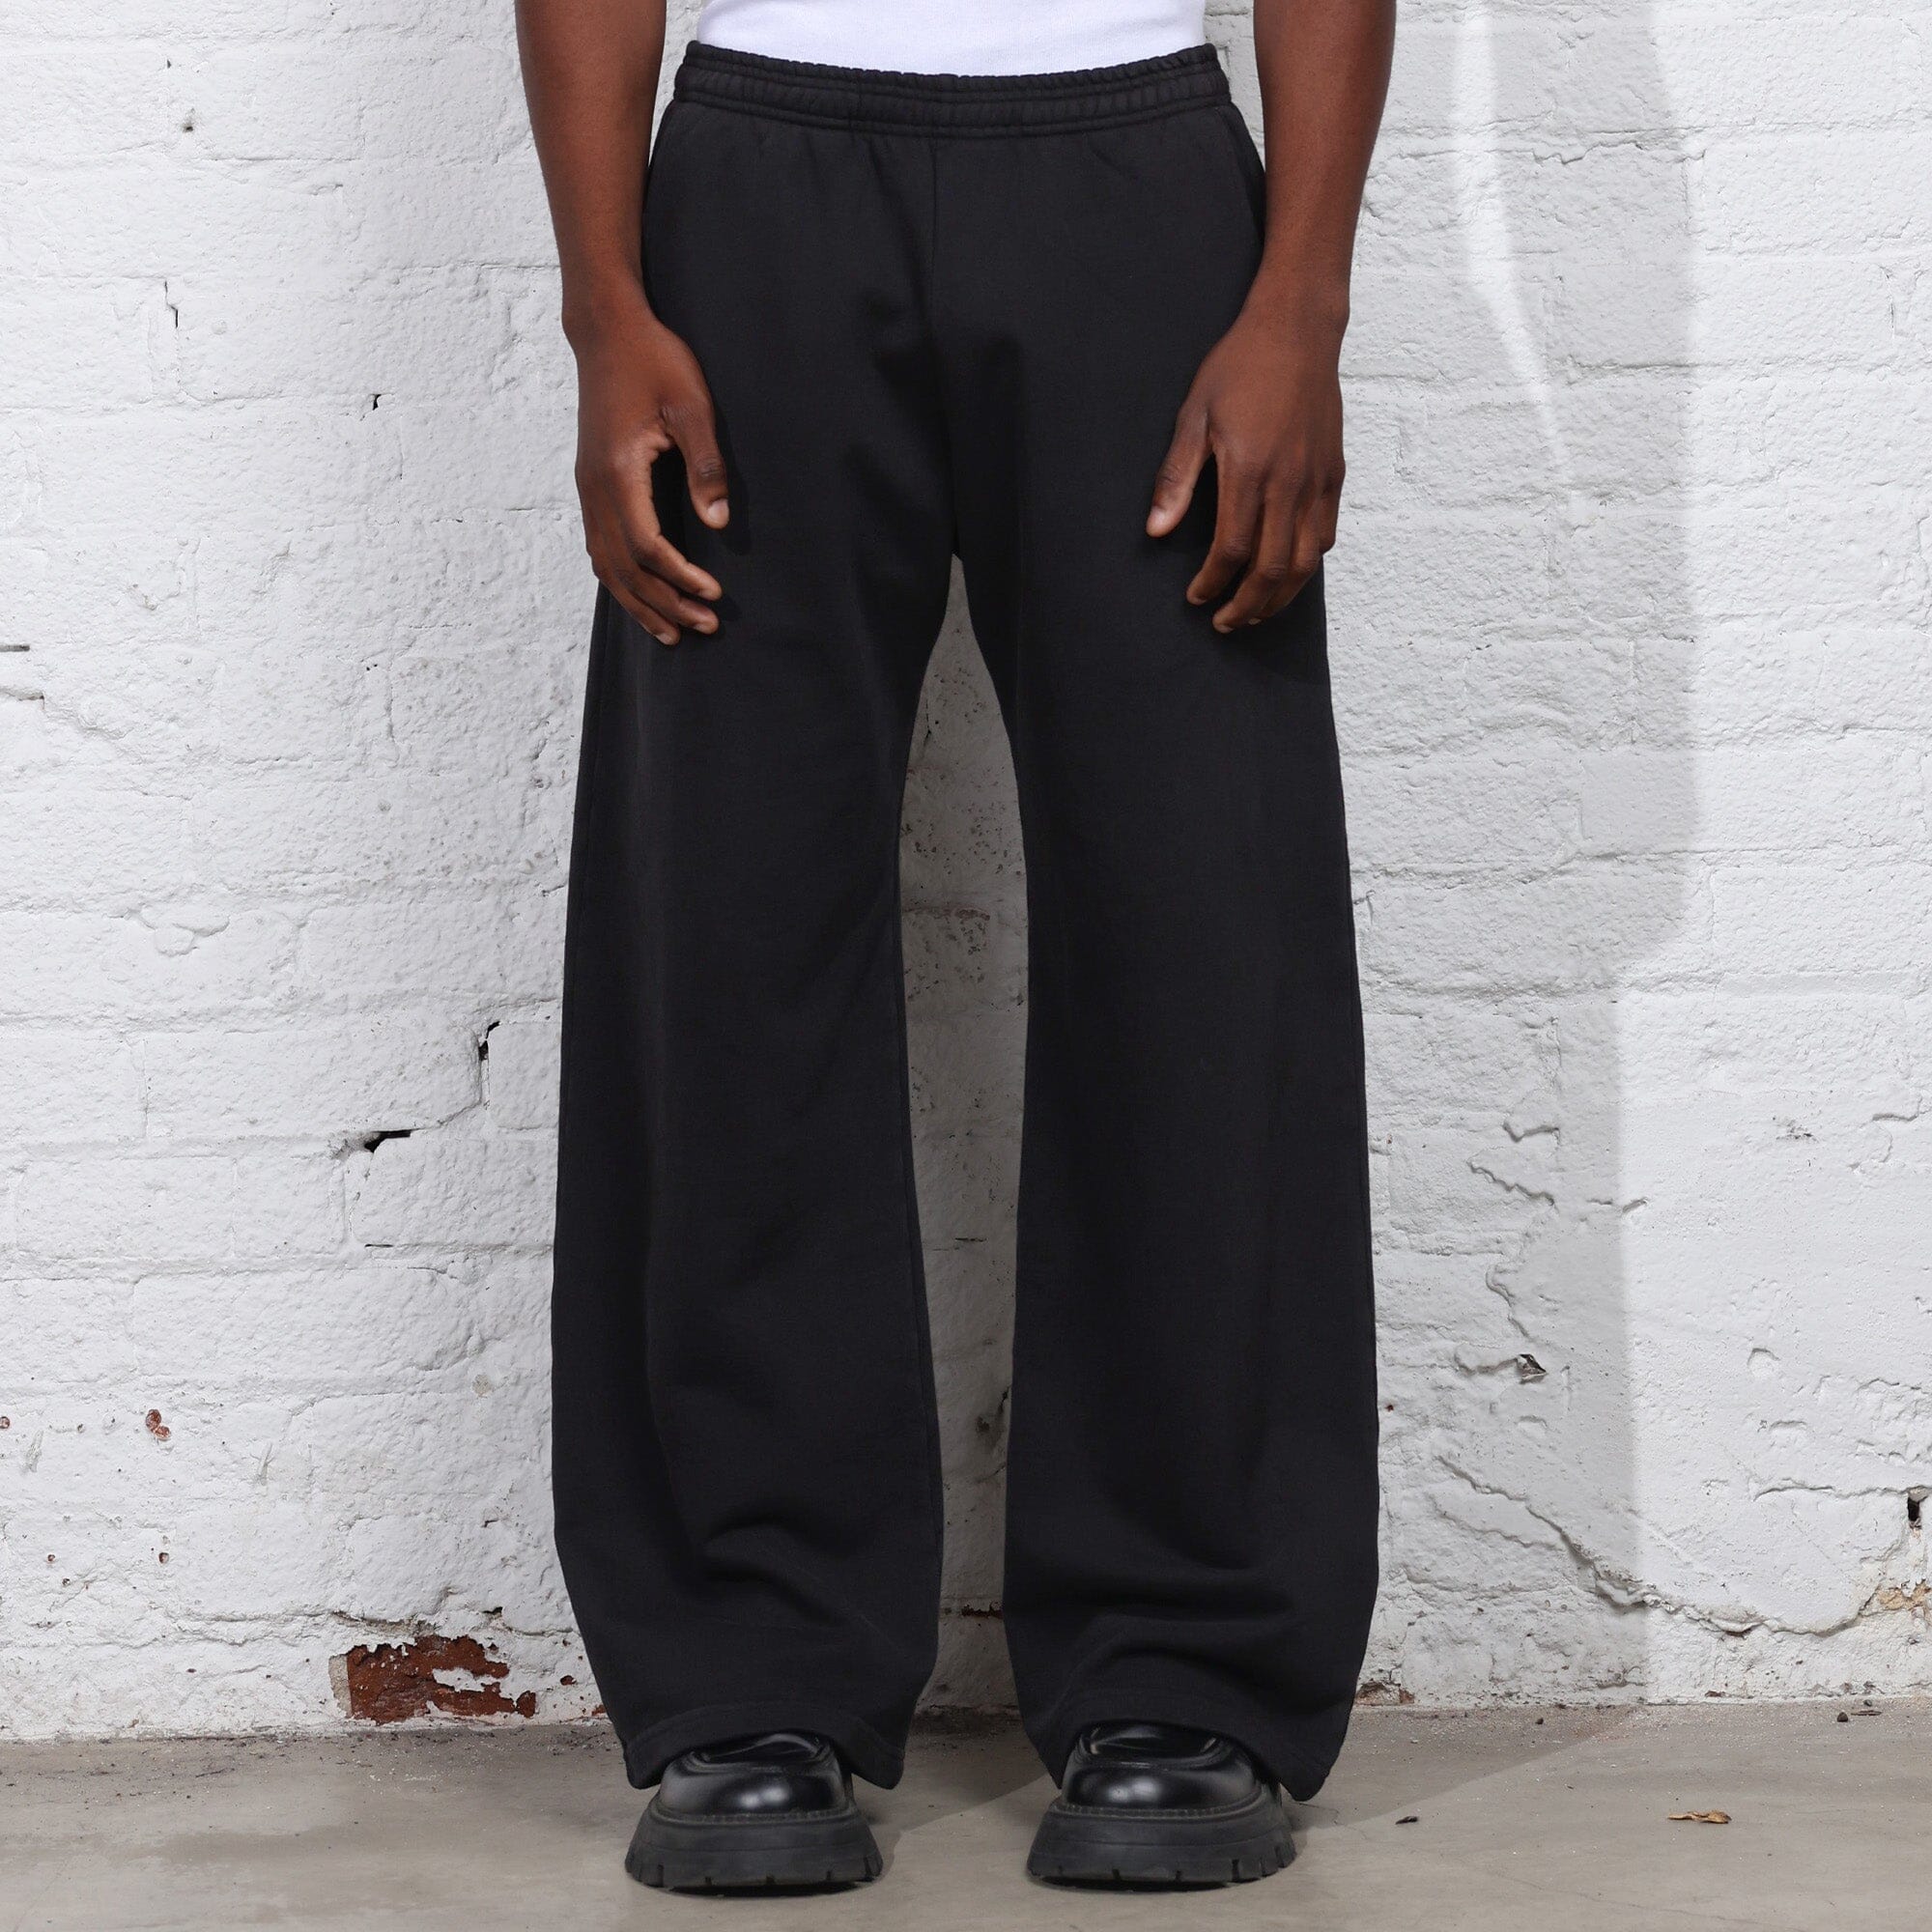 Lafayette Flare Studio Pants (Sweats) Ageless Black 